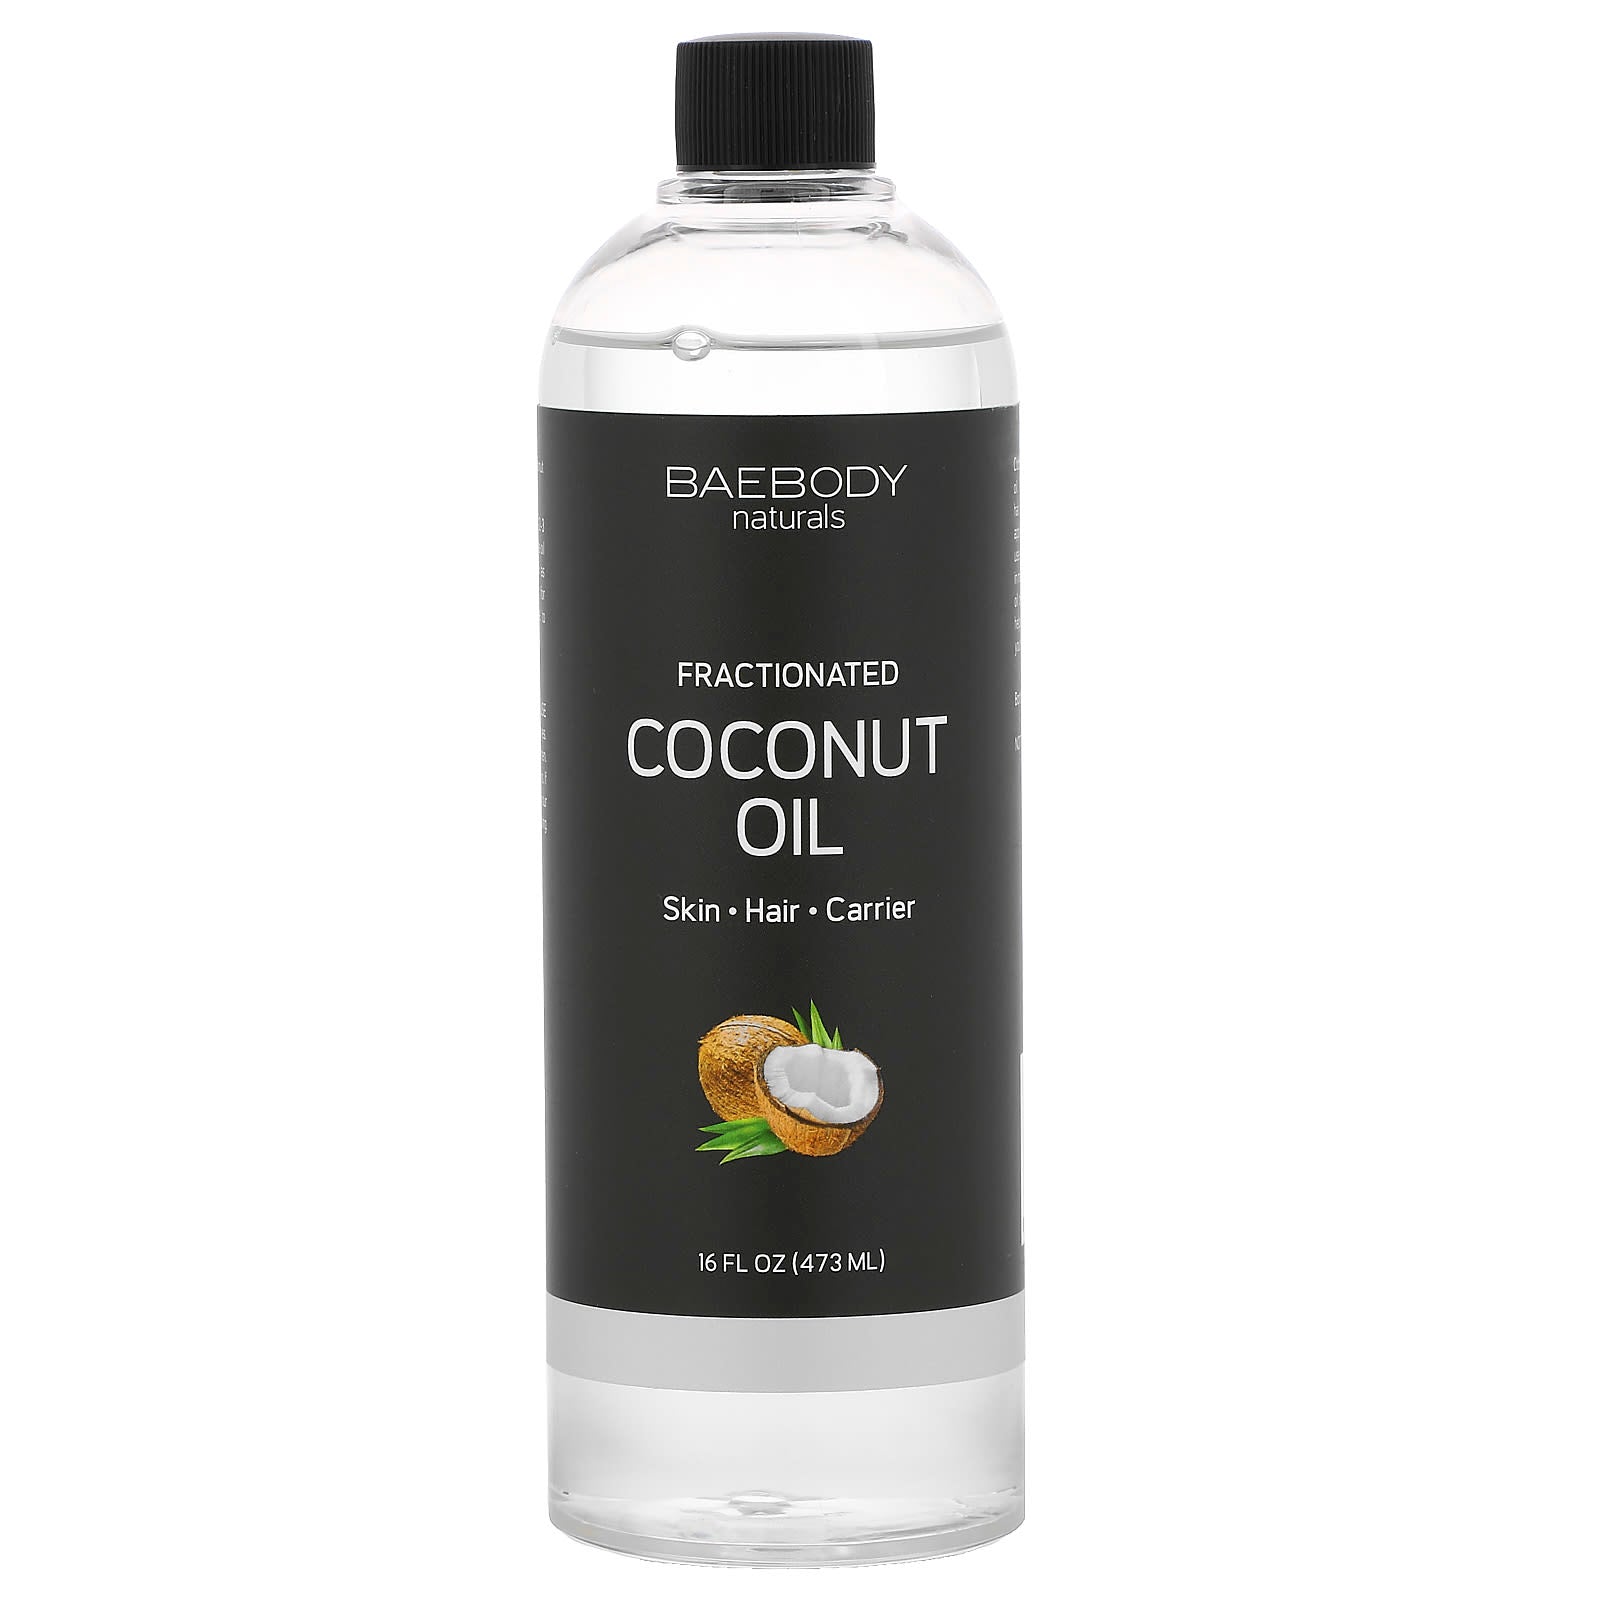 Baebody, Fractioned Coconut Oil (473 ml)